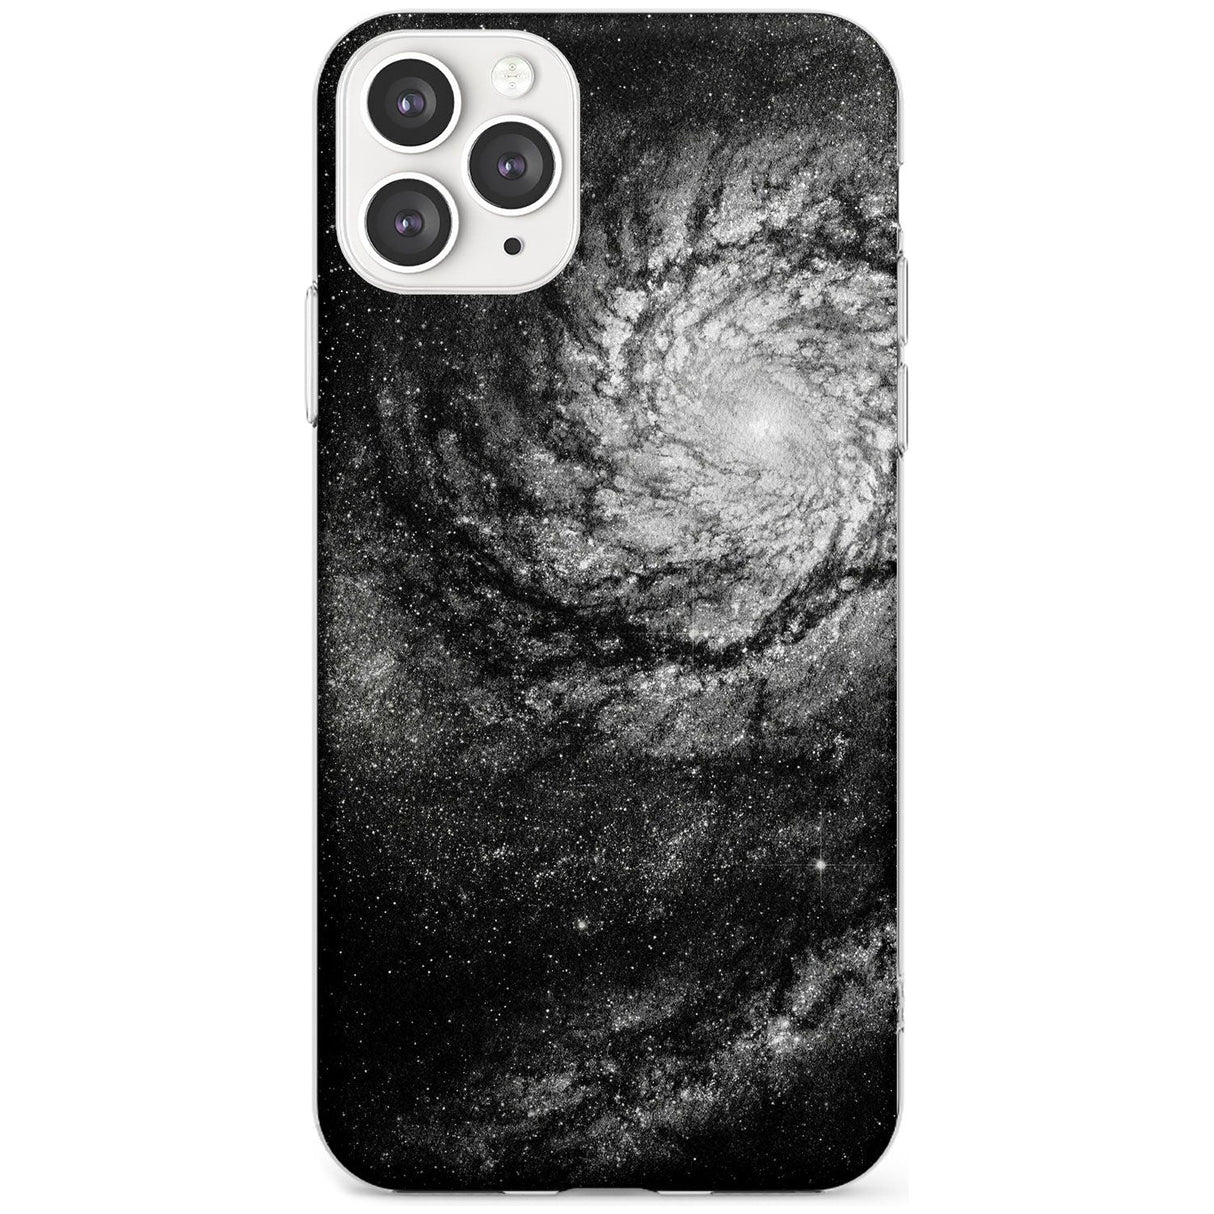 Night Sky Galaxies: Milky Way Galaxy Phone Case iPhone 11 Pro Max / Clear Case,iPhone 11 Pro / Clear Case,iPhone 12 Pro Max / Clear Case,iPhone 12 Pro / Clear Case Blanc Space